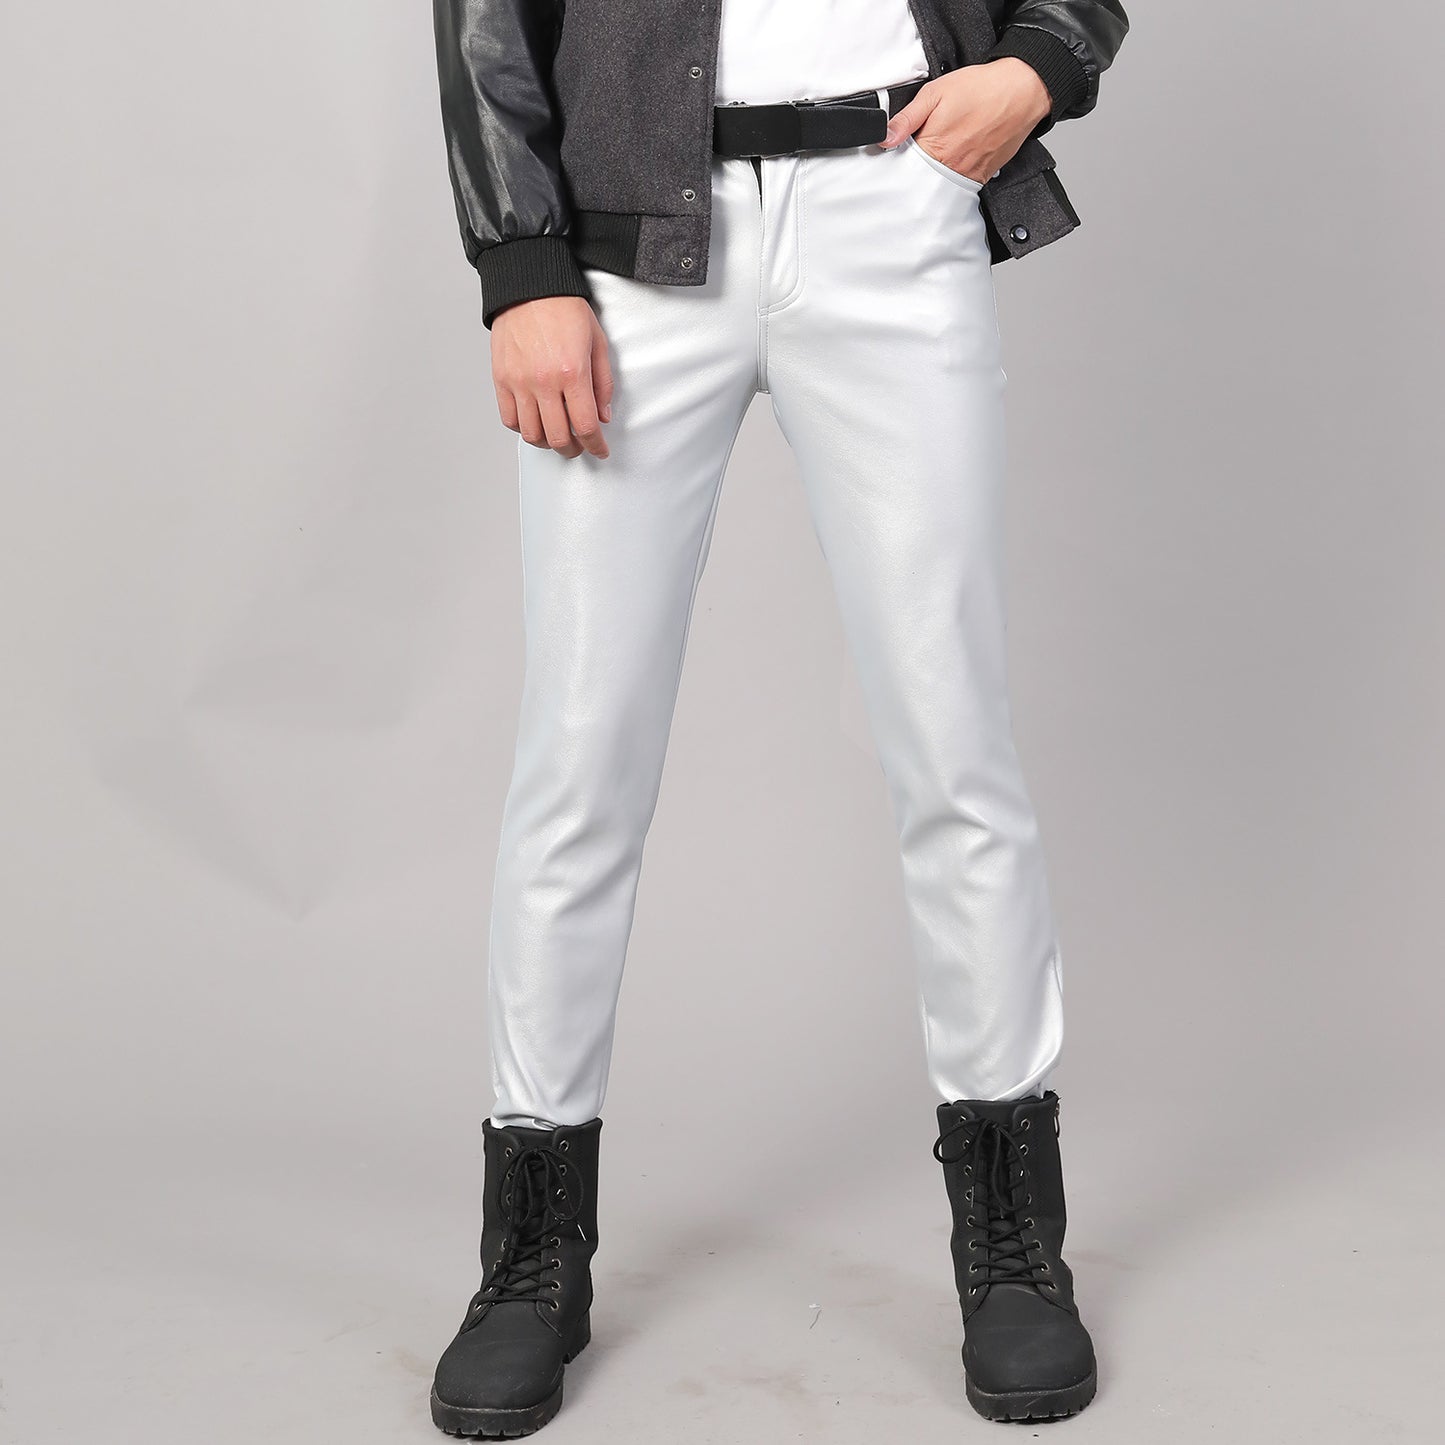 Korean Slim Leather Pants Men's Slim Pants